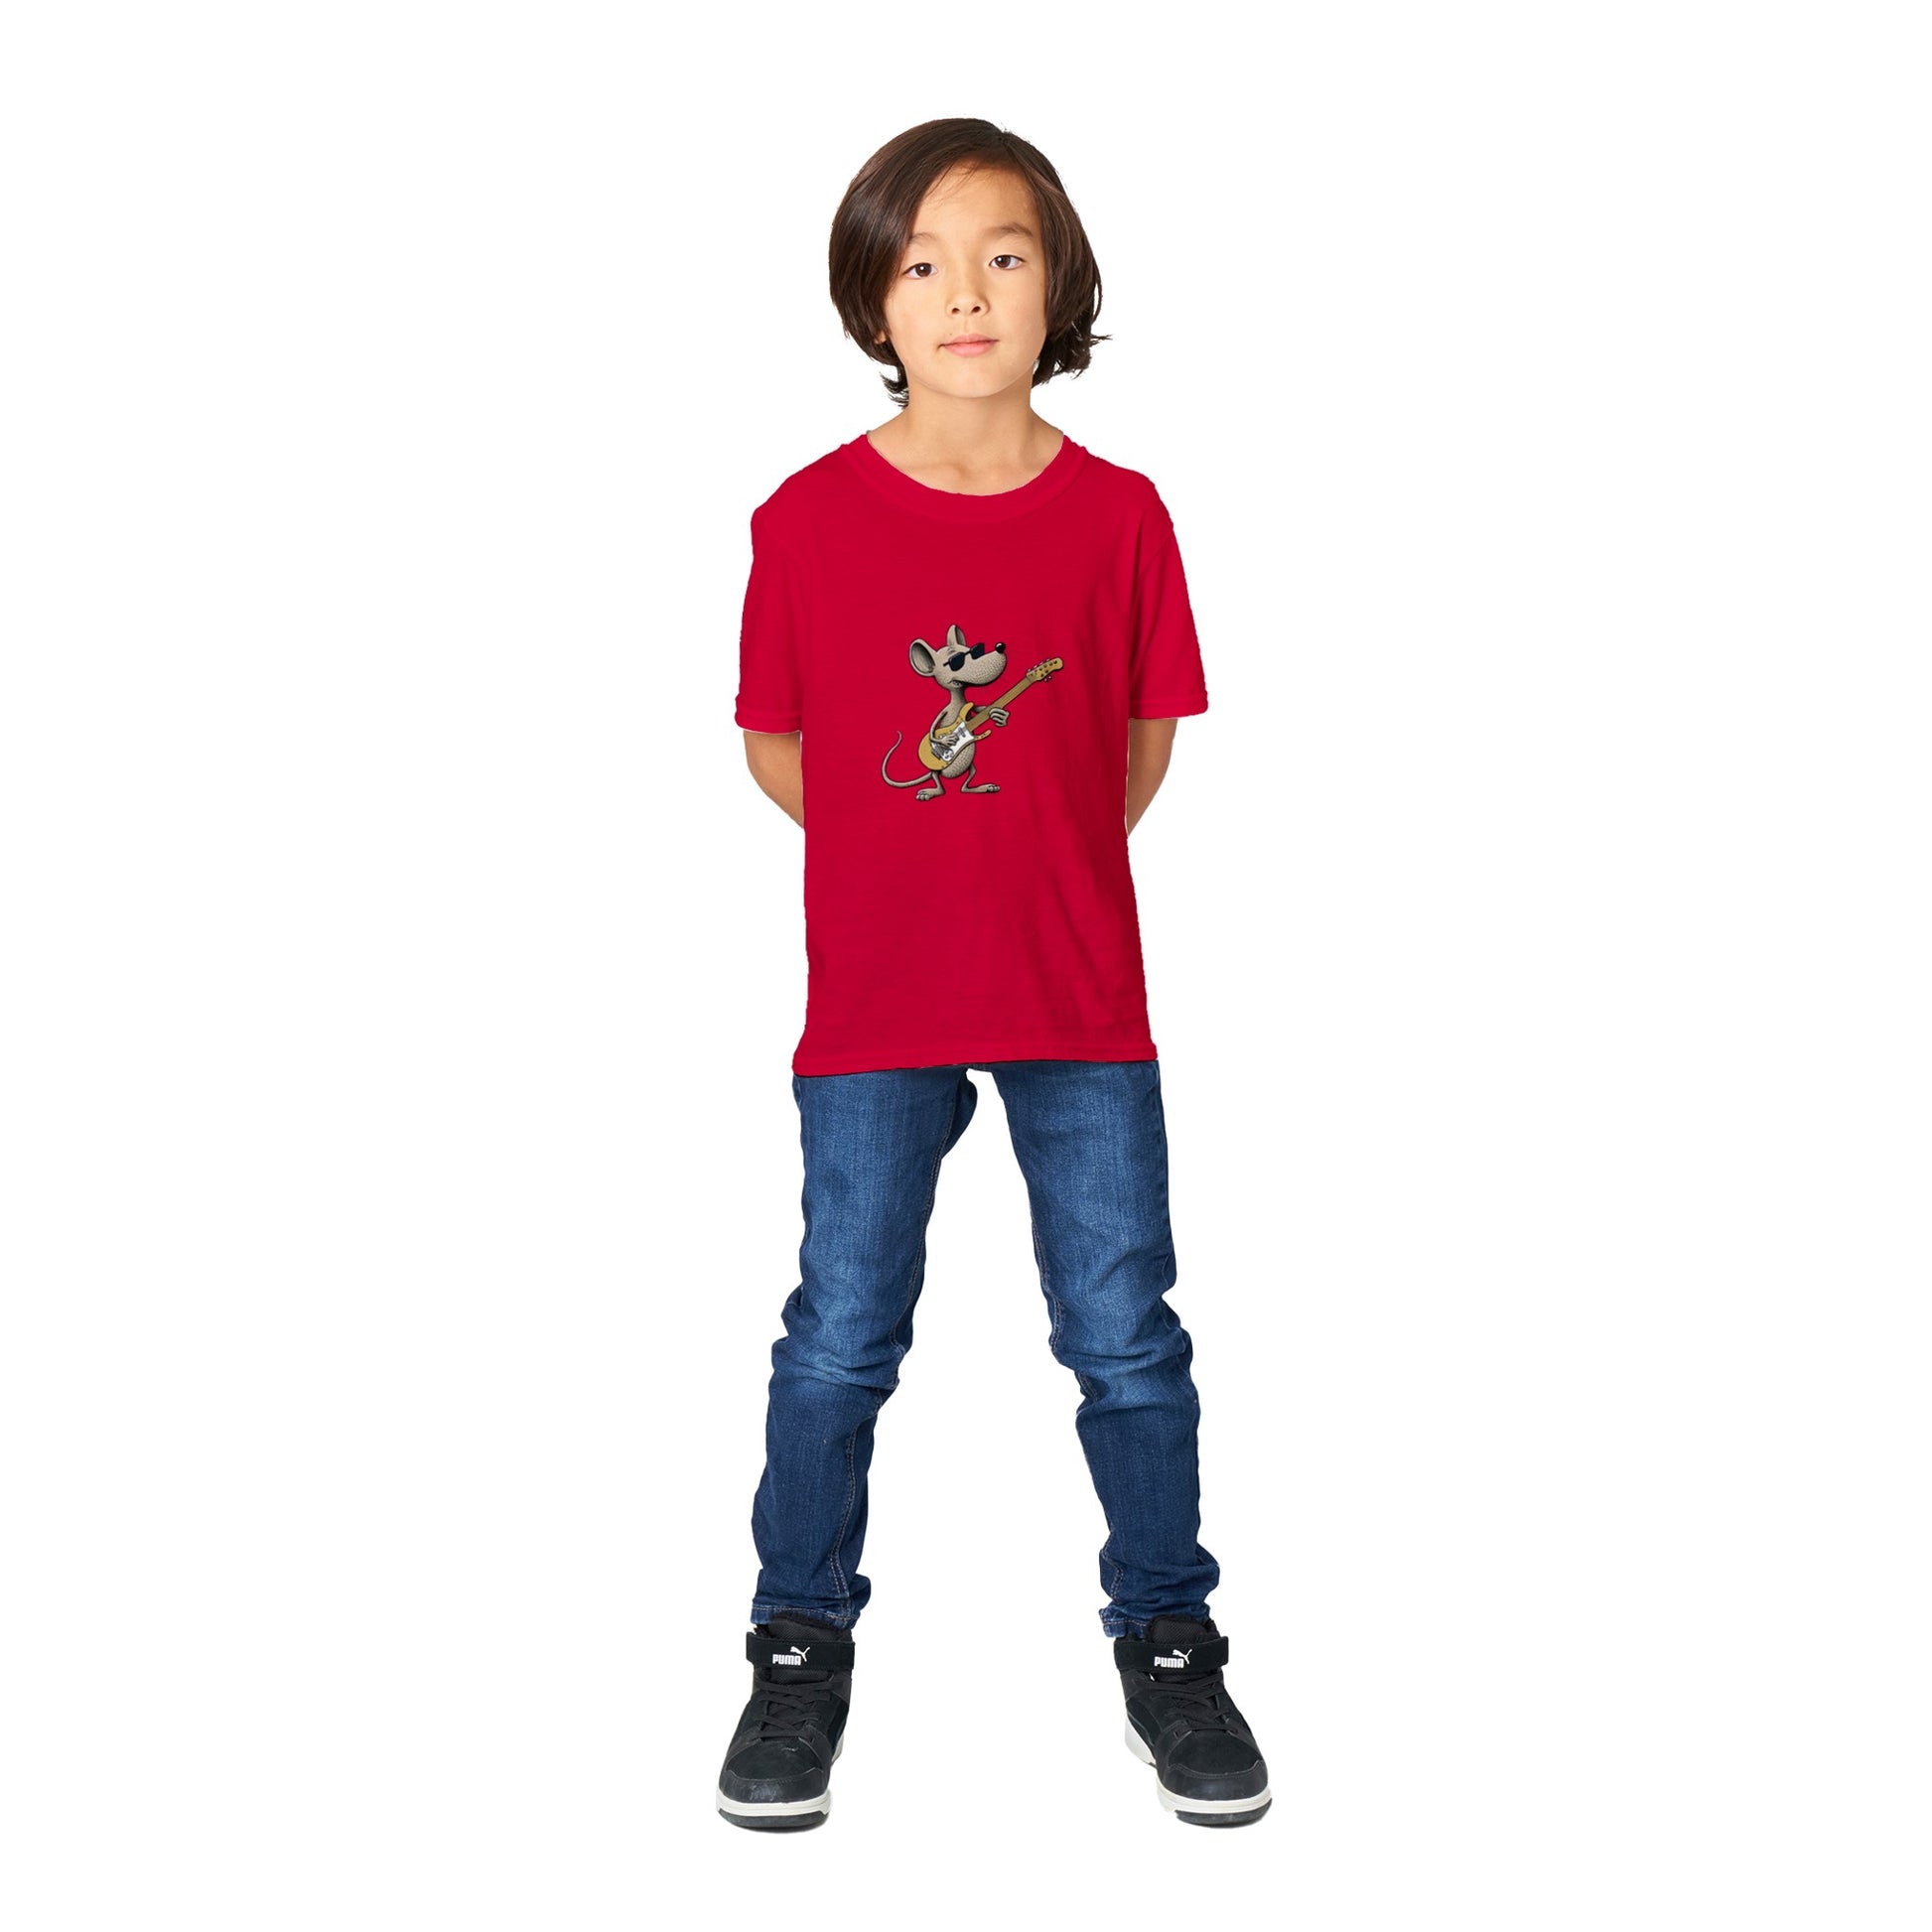 Kid wearing Cool rat playing a guitar print on red t-shirt